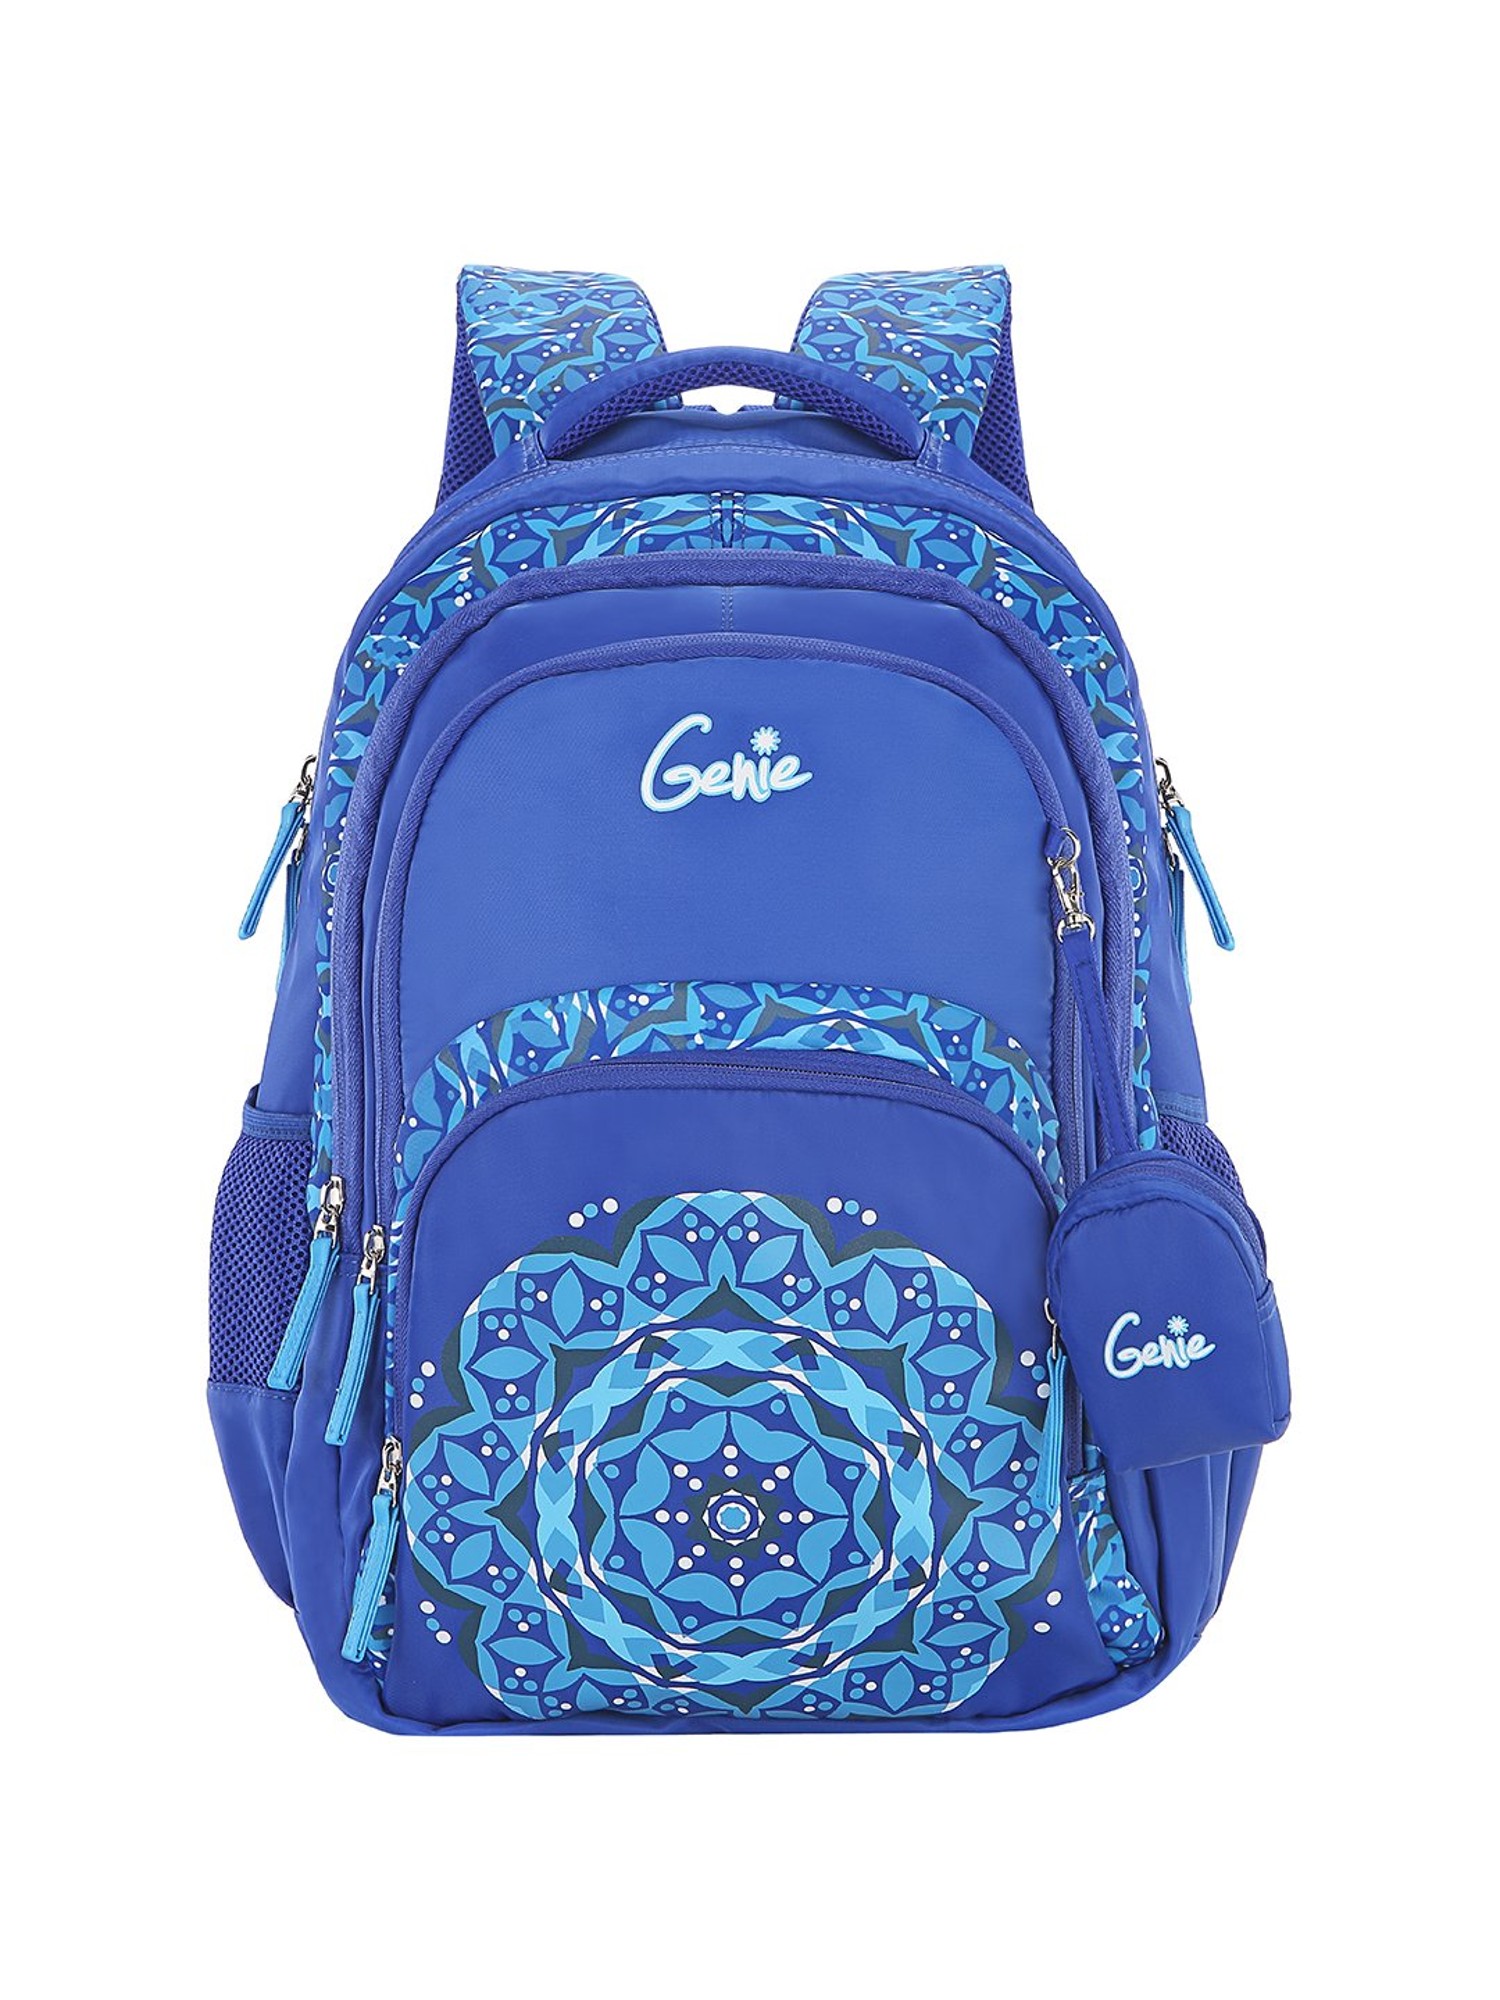 Genie kitty 15 sb school backpack navy blue|school bag – arihant-bag-center